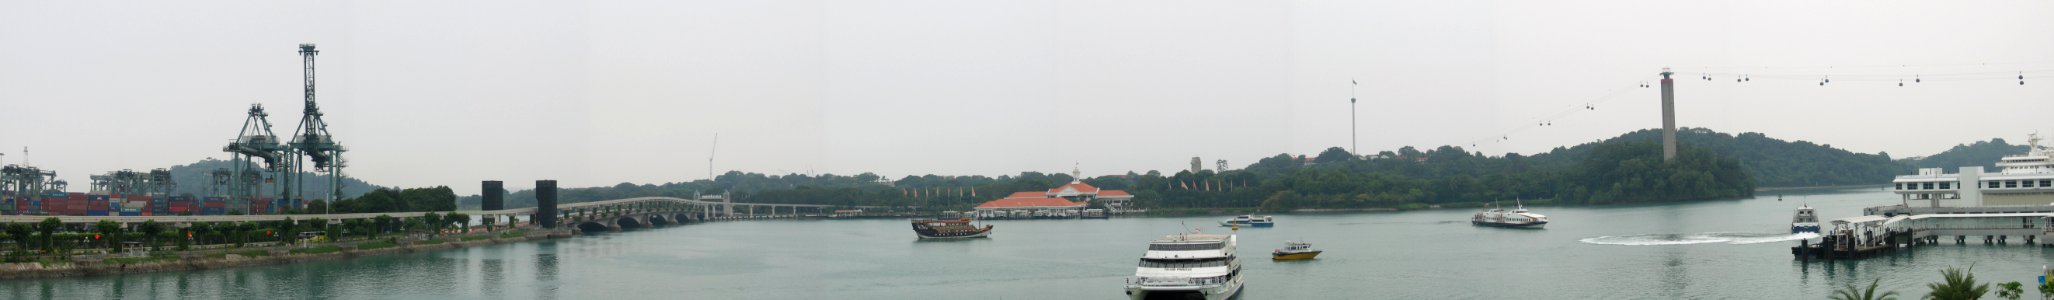 Sentosa and Cruise Bay, Singapore, panorama, Nov 06